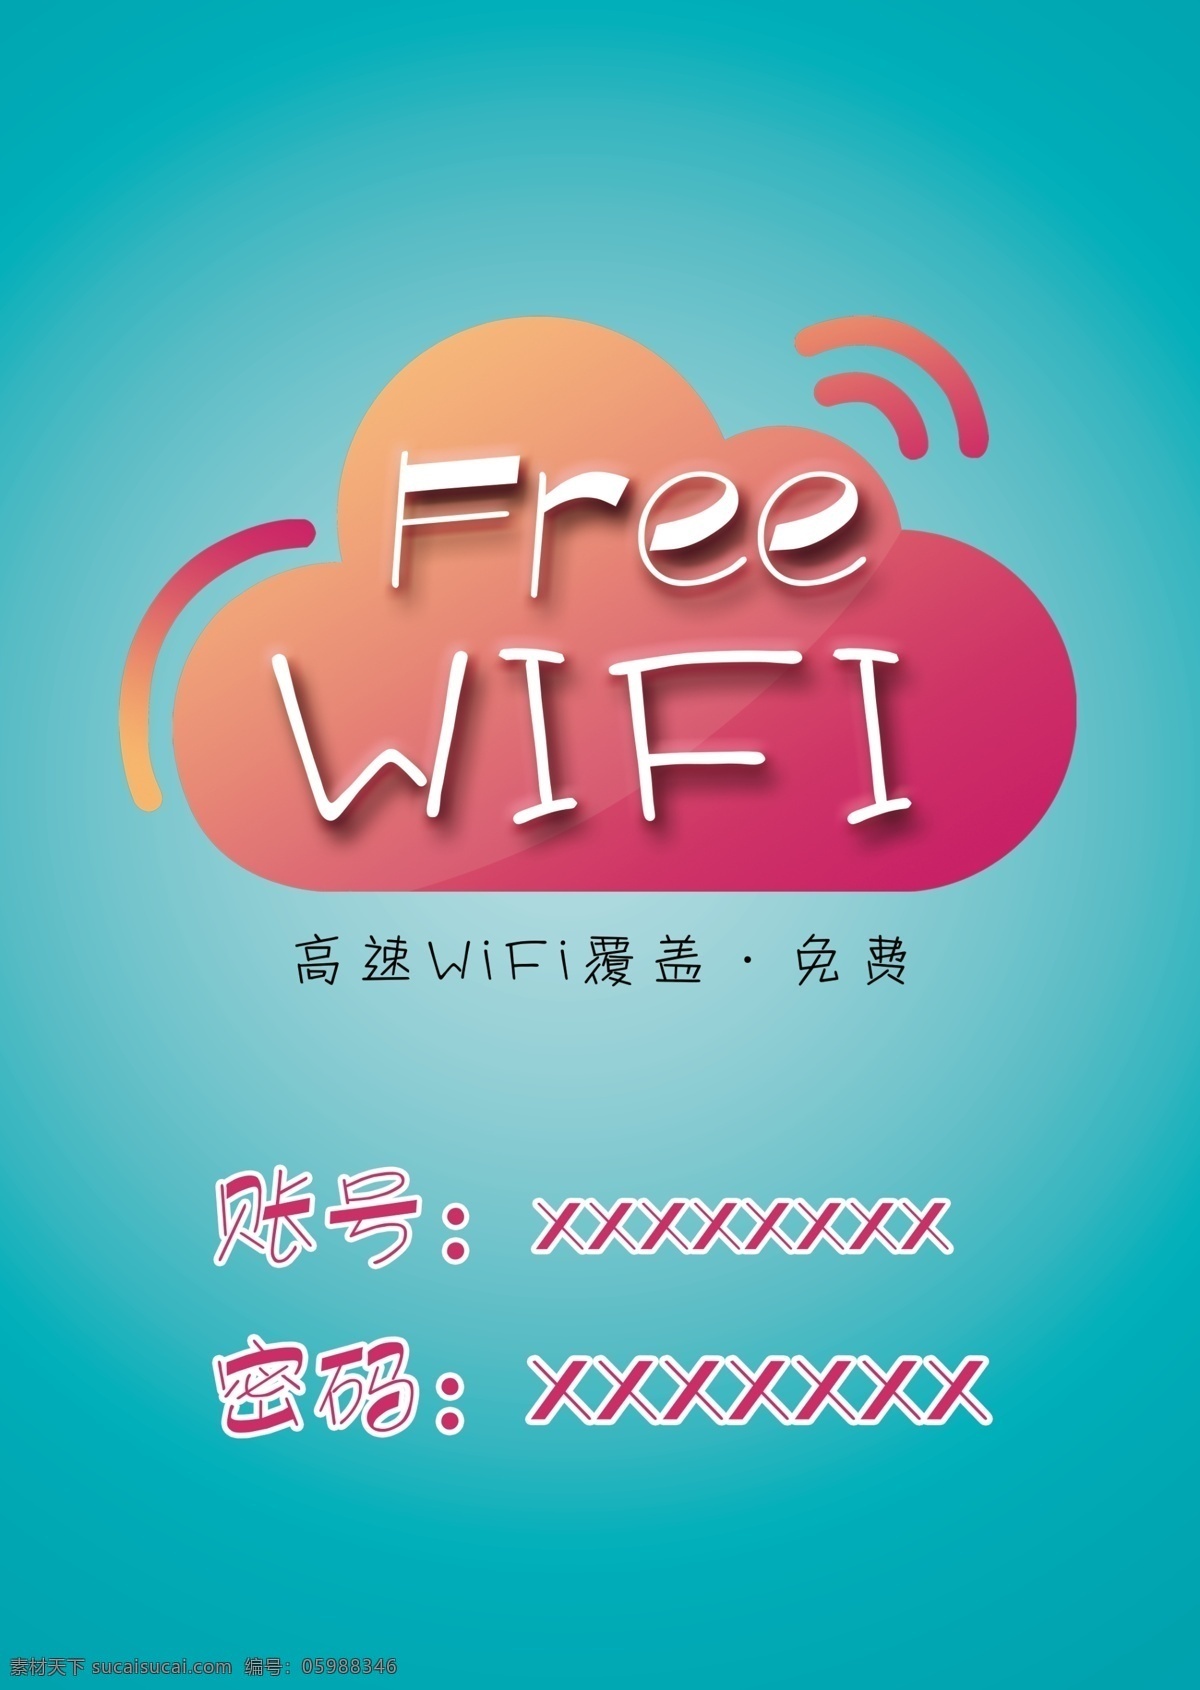 wifi图标 wifi 免费wifi 网络已覆盖 渐变效果 免费 牌 分层